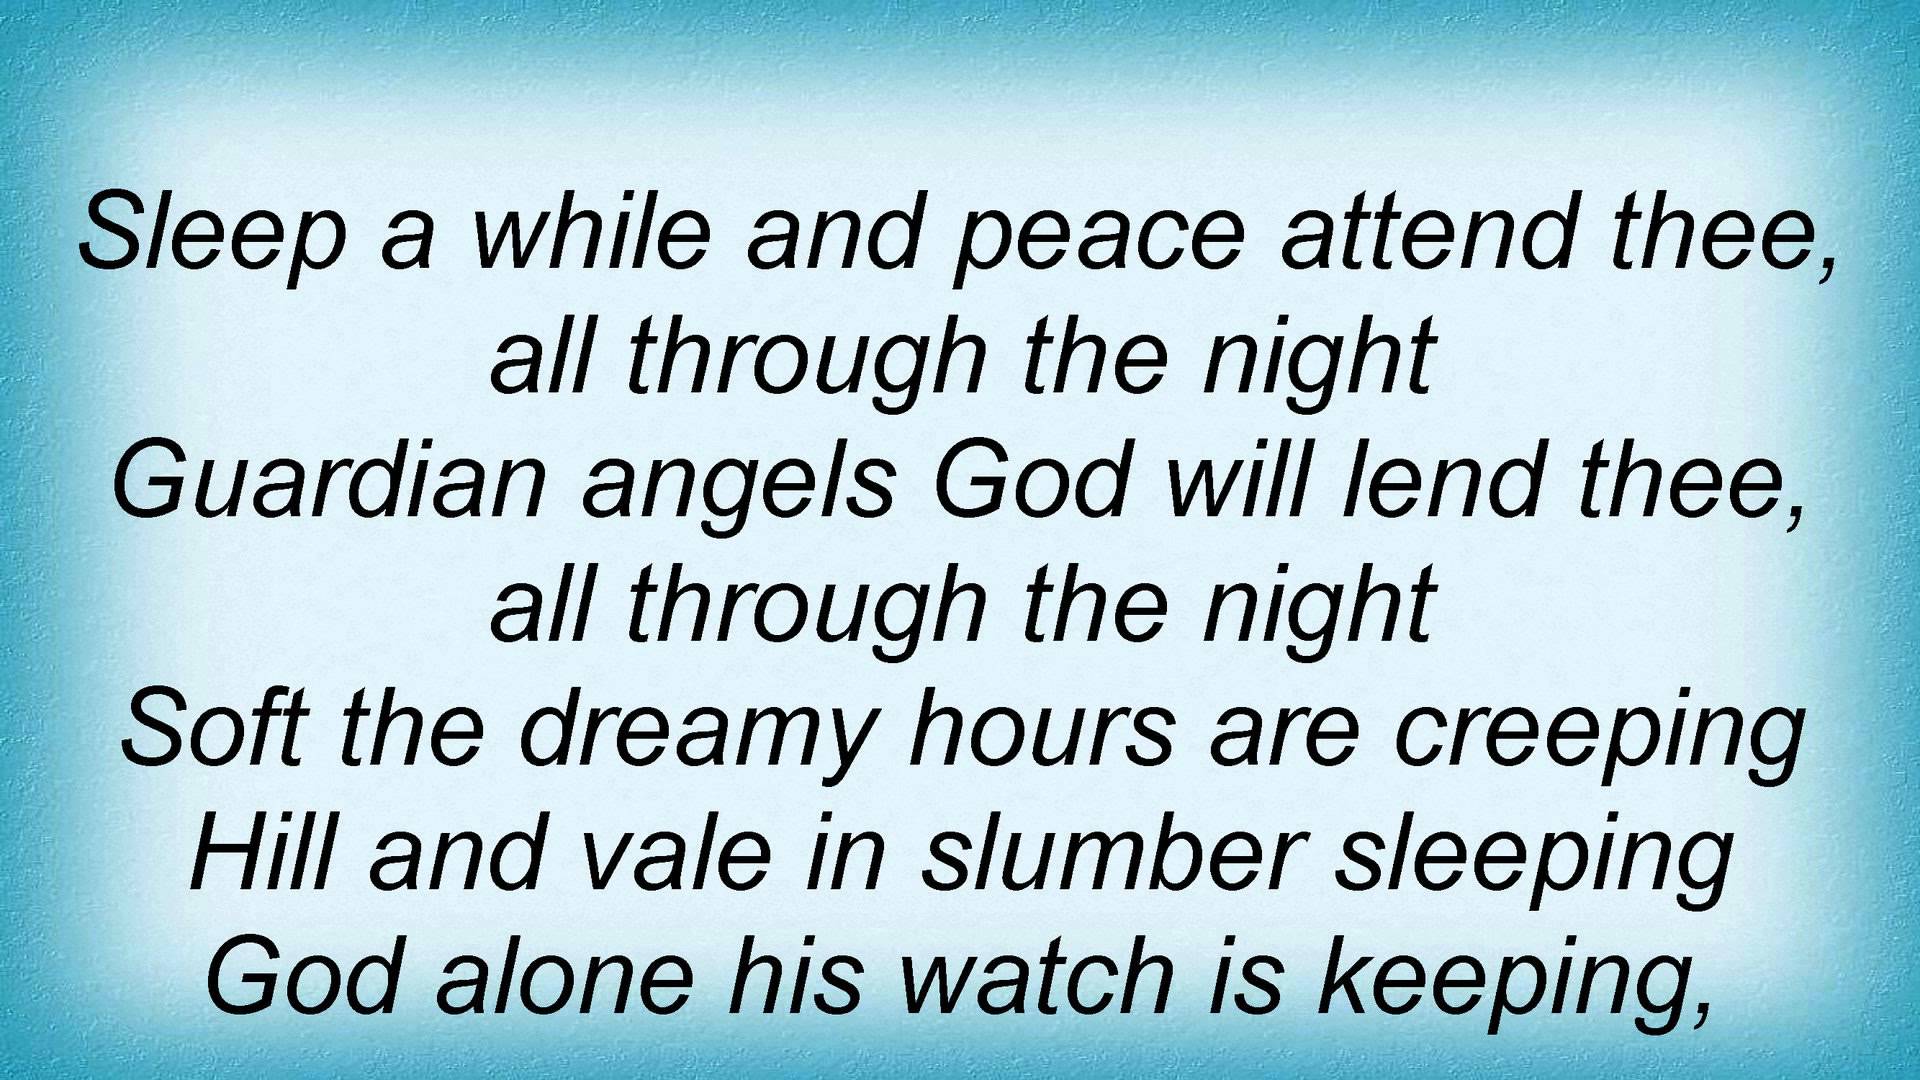 All through the night, song lyrics by Harold Boulton